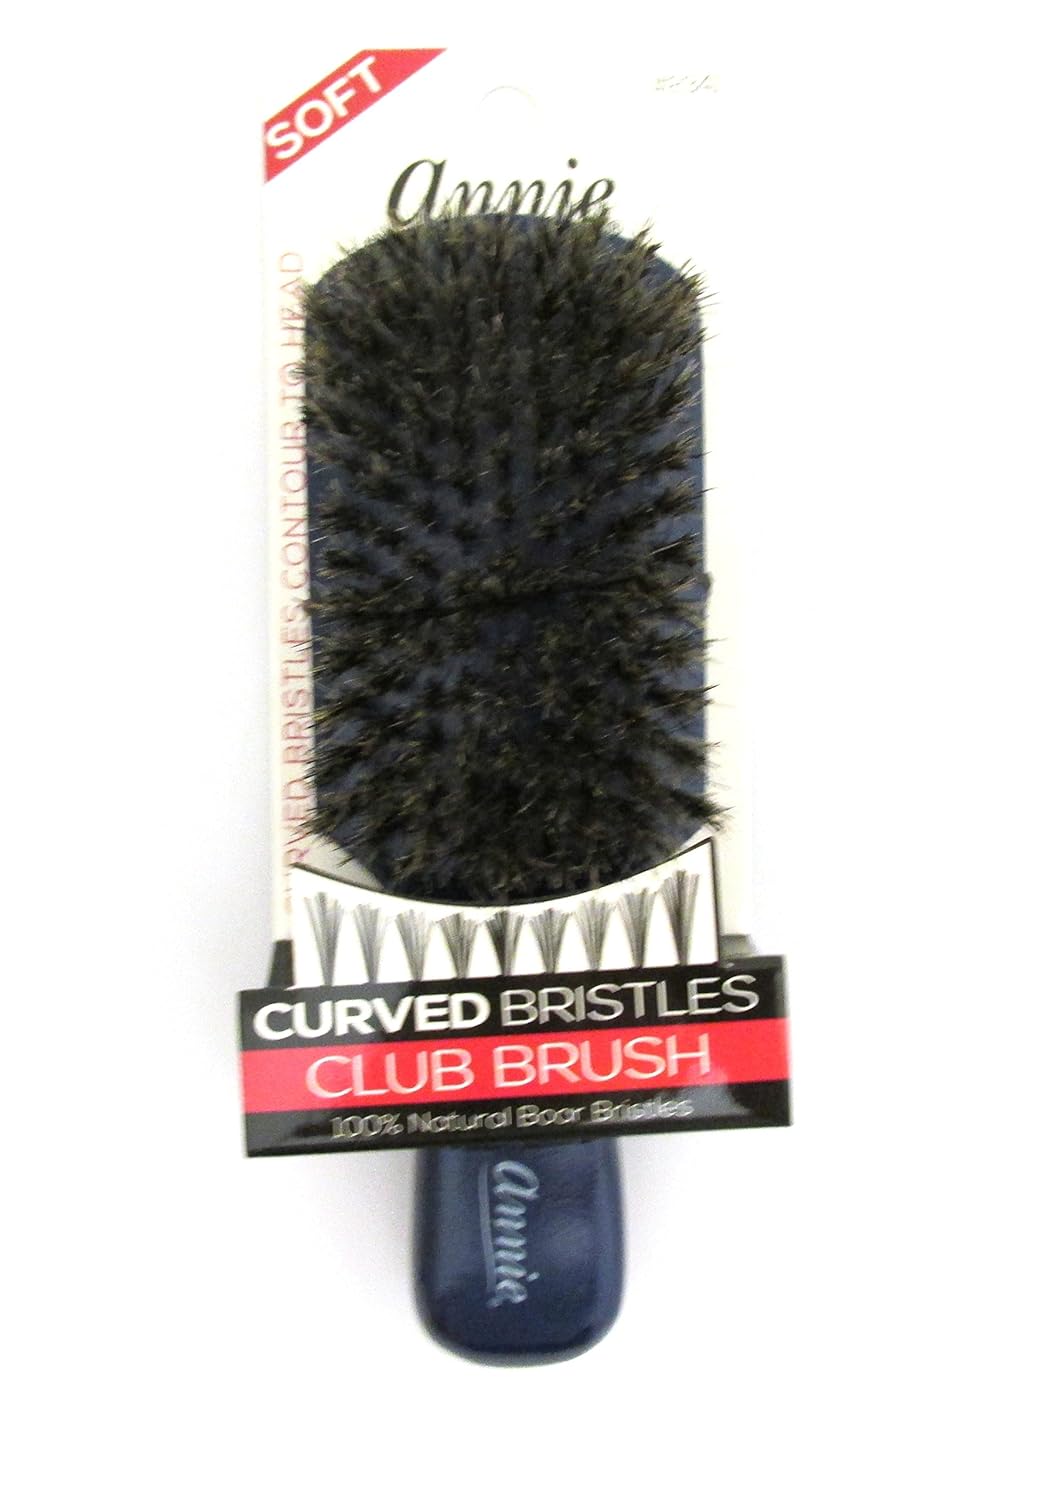 ANNIE Soft Wave Curved Bristle Brush 100% Pure Boar Bristles #2340